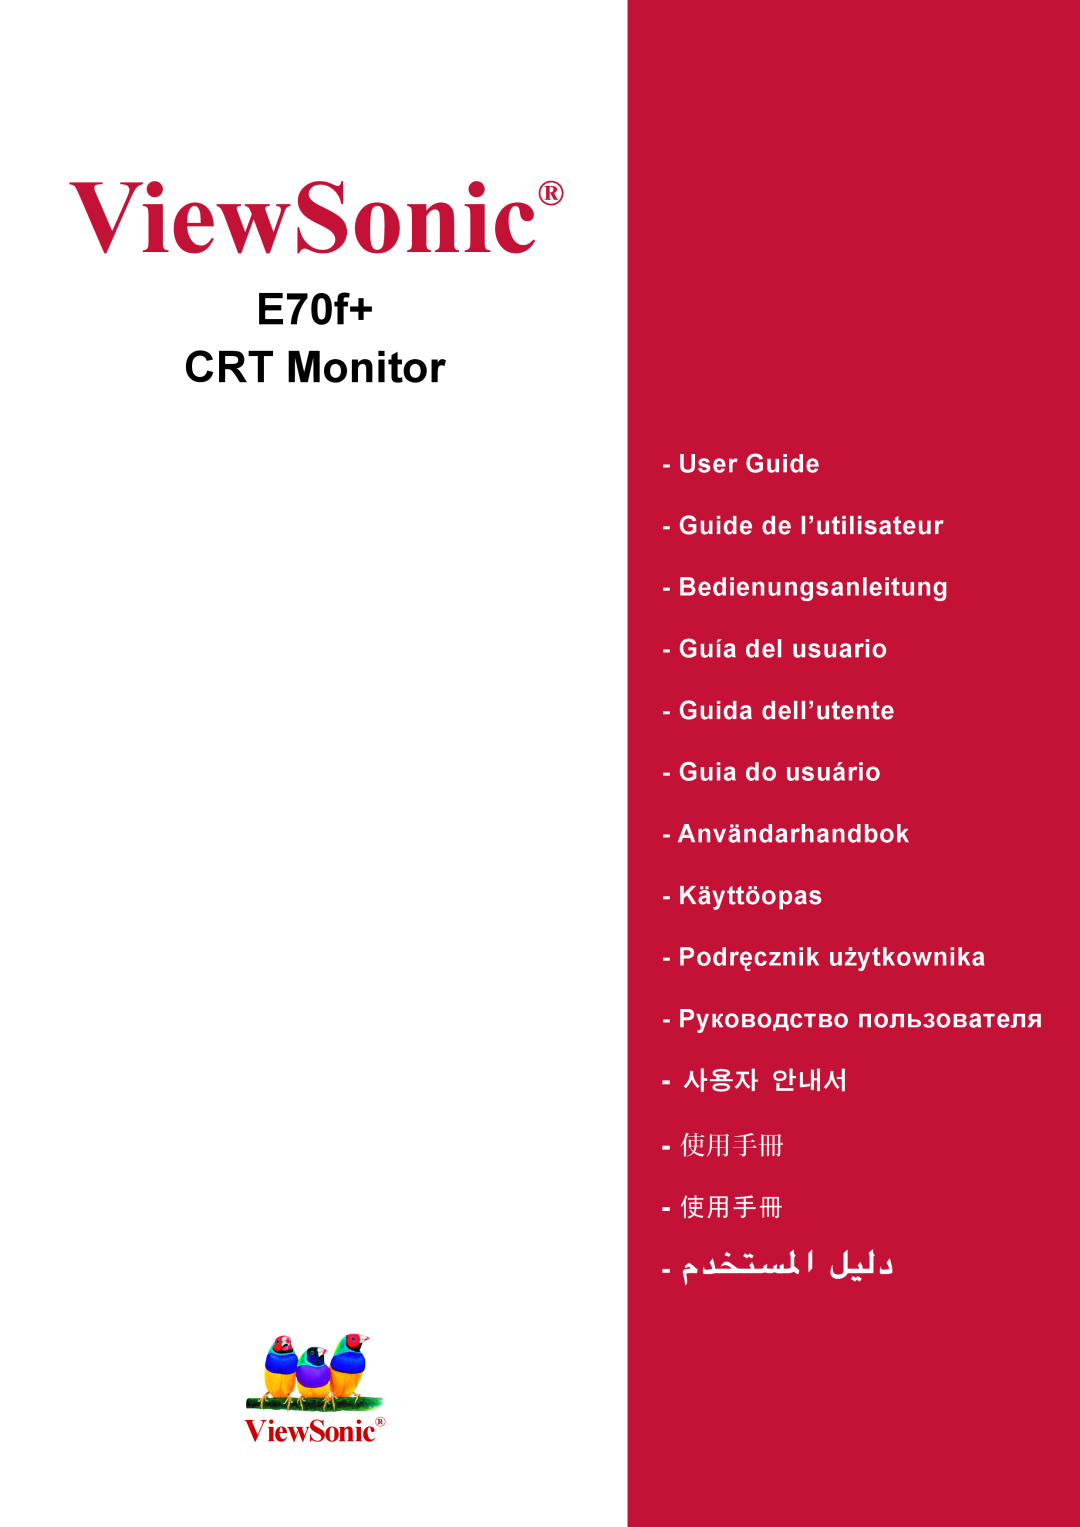 ViewSonic manual ViewSonic, E70f+ CRT Monitor, User Guide, Podręcznik użytkownika Руководство пользователя, 사용자 안내서 